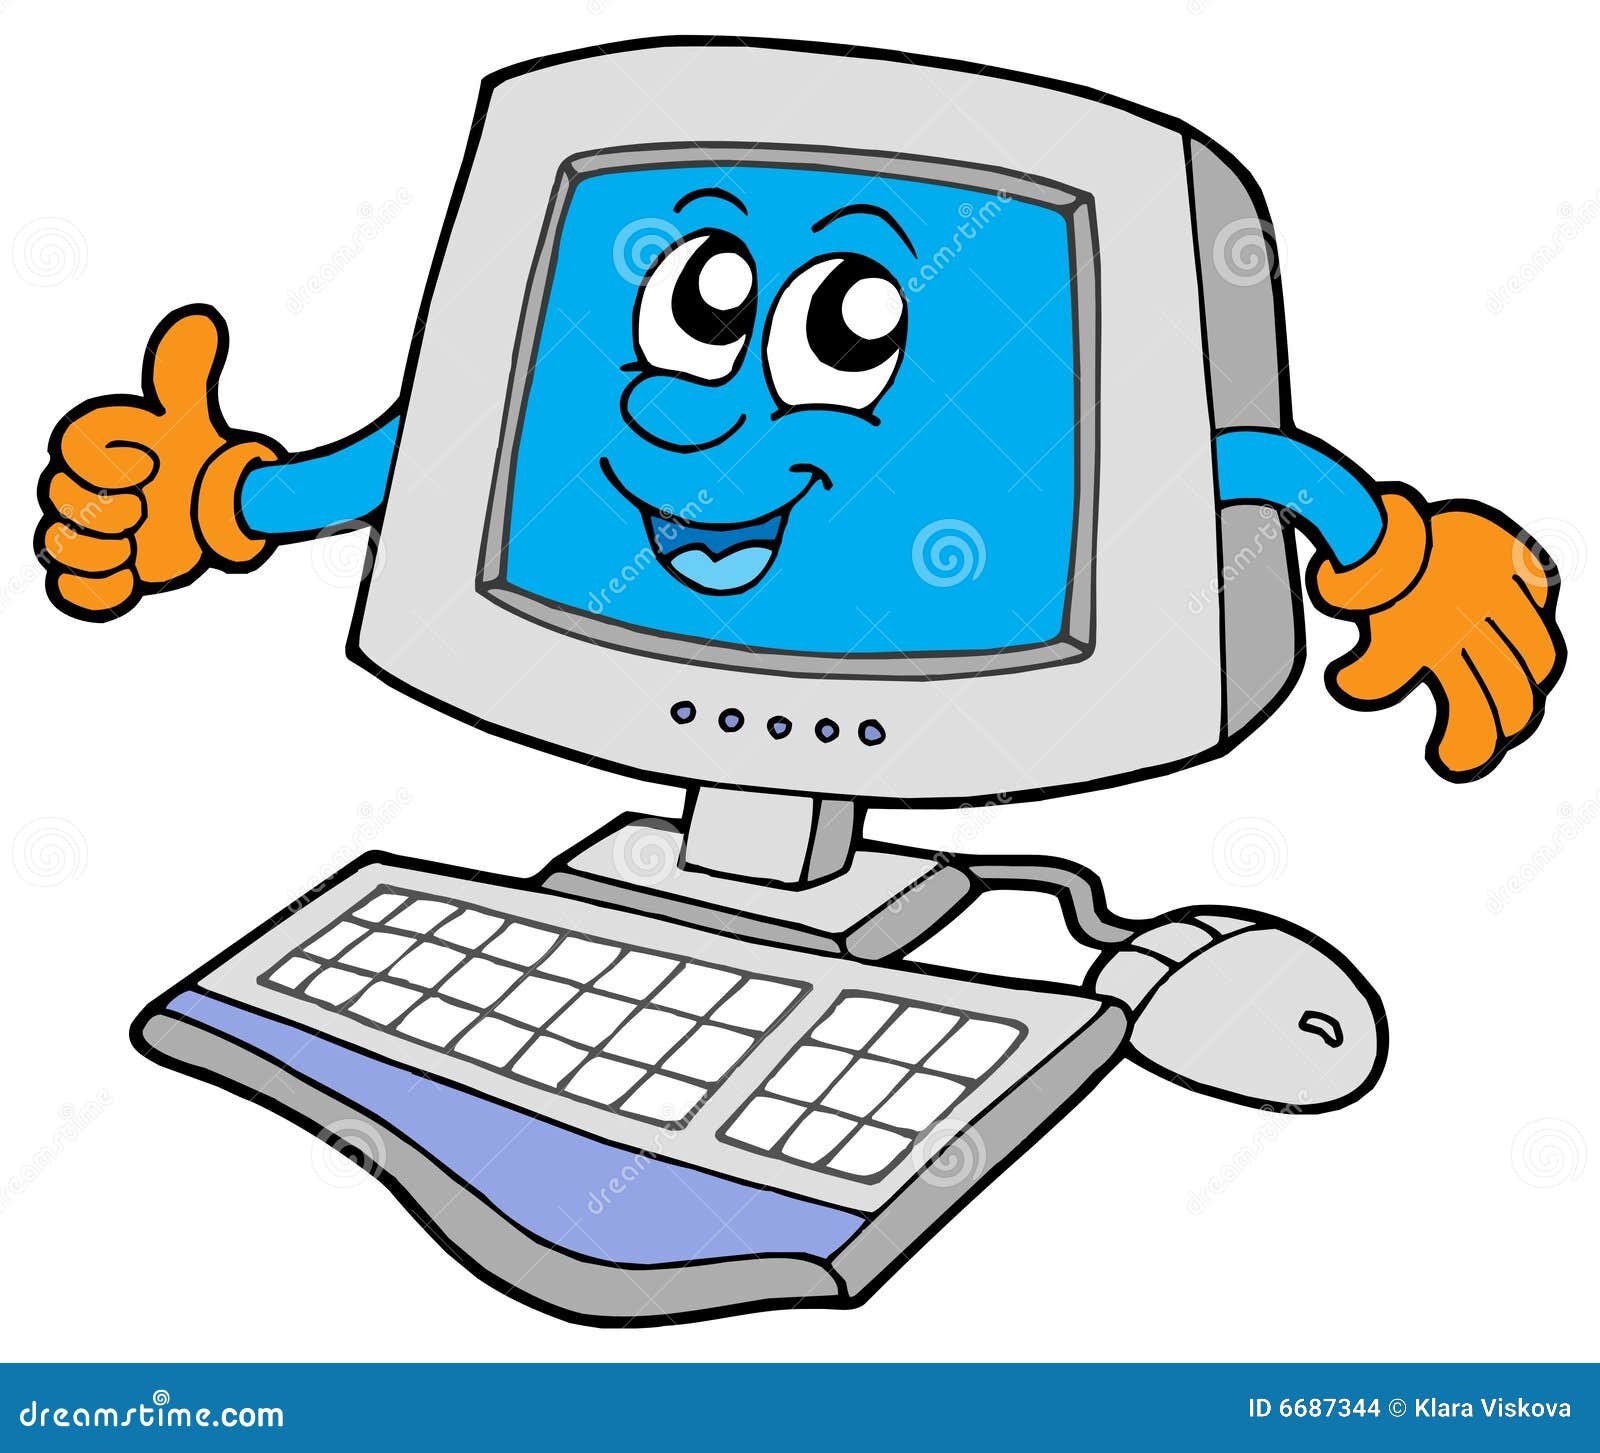 Happy Computer Cartoon In Light Blue Tones Isolated Stock Photo ...